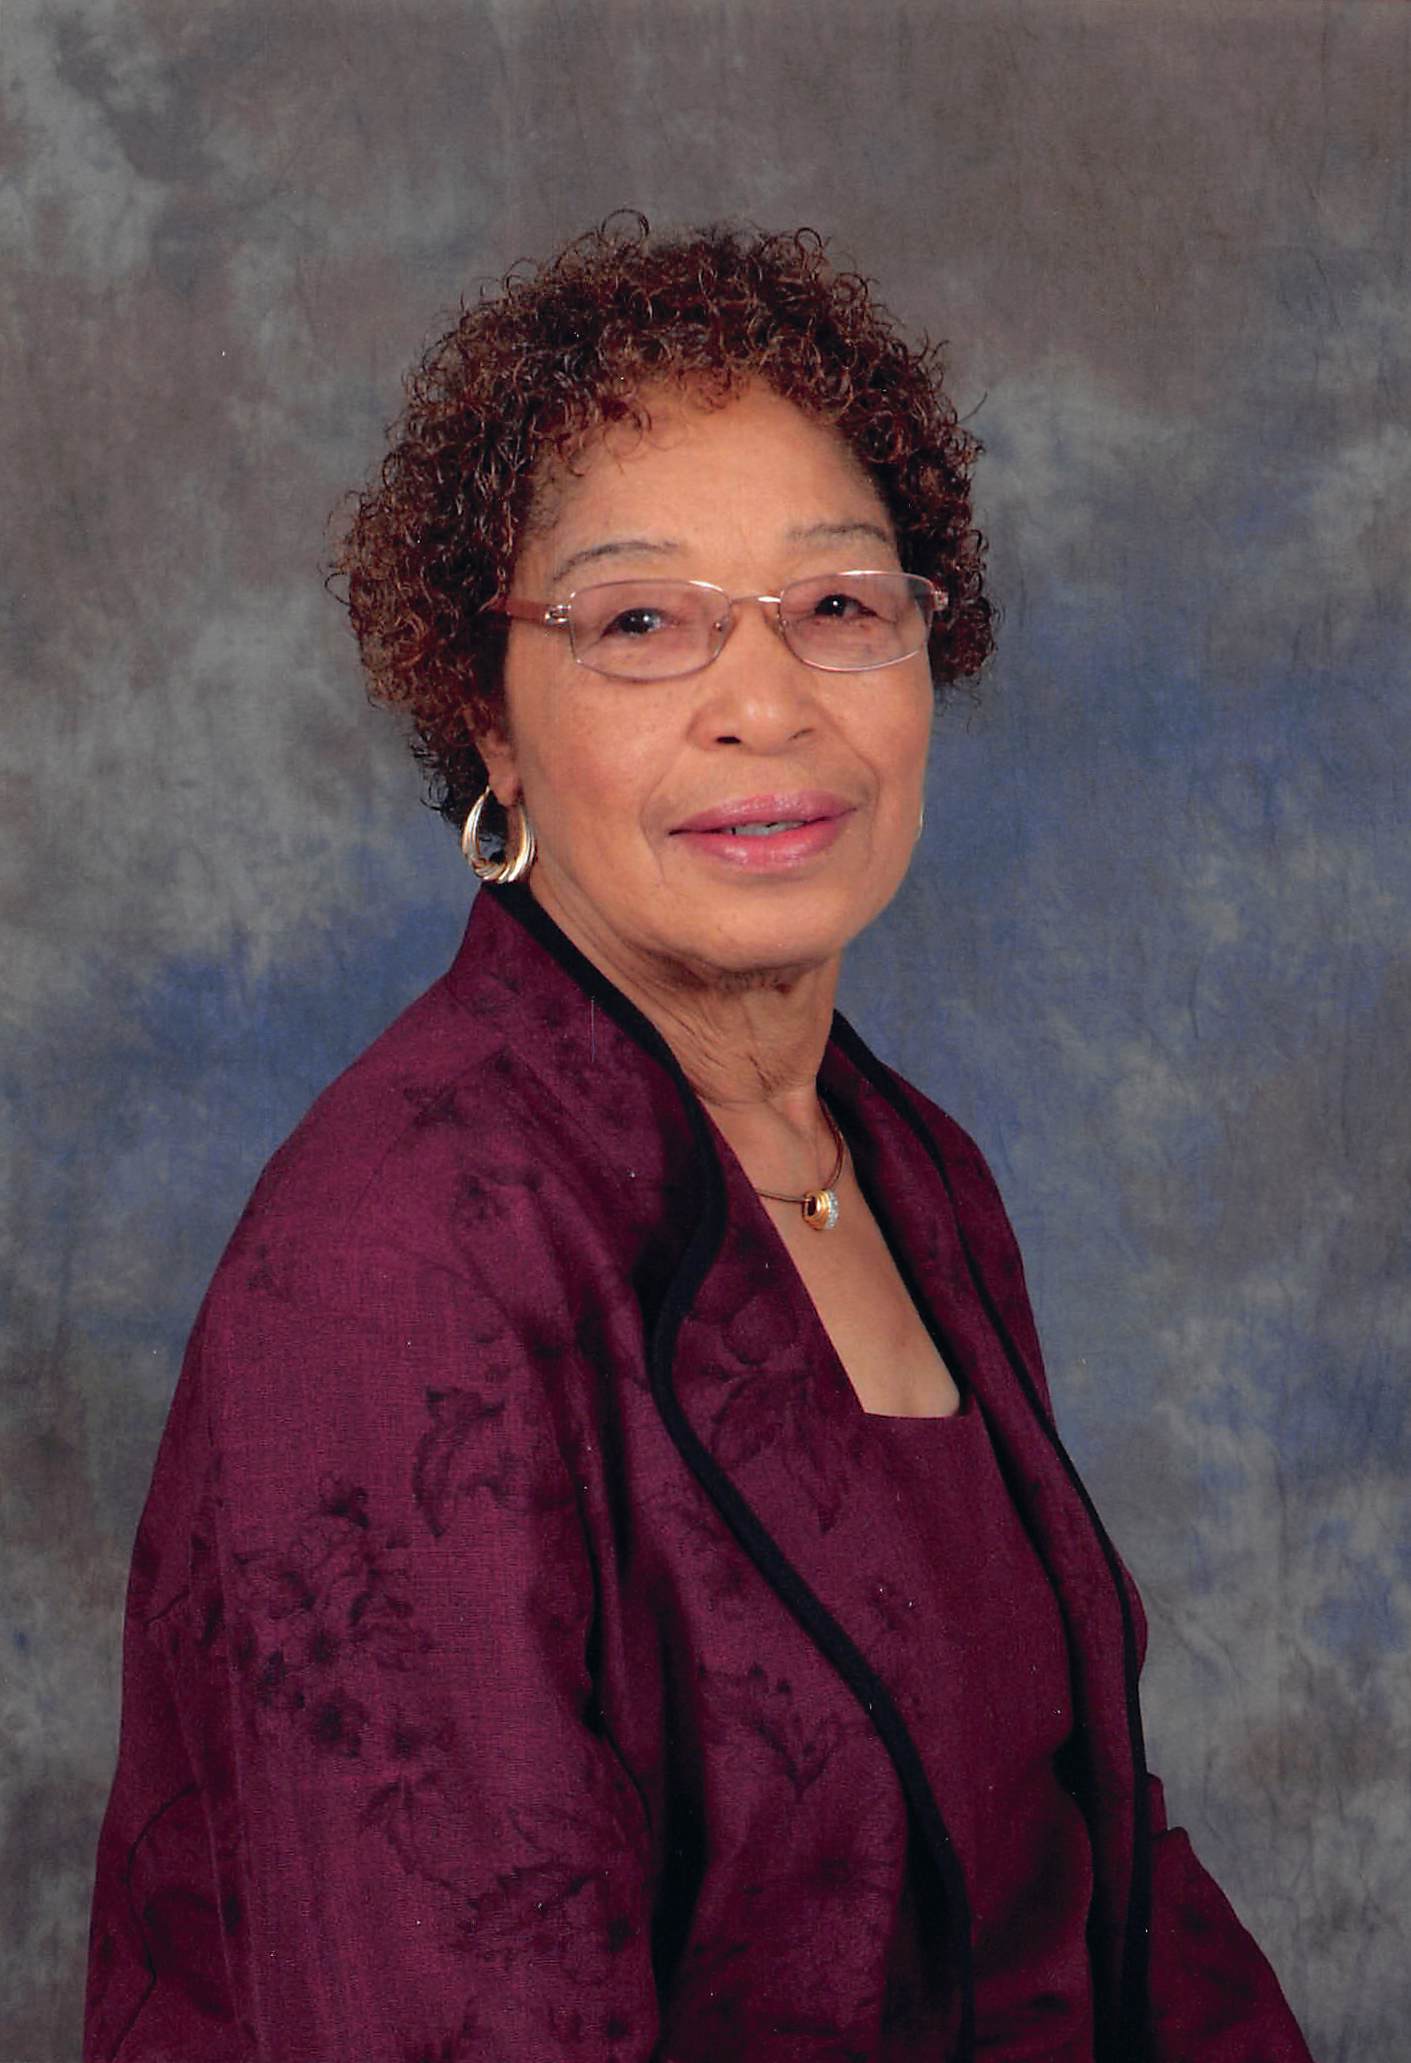 Obituary for Arlene Lewis